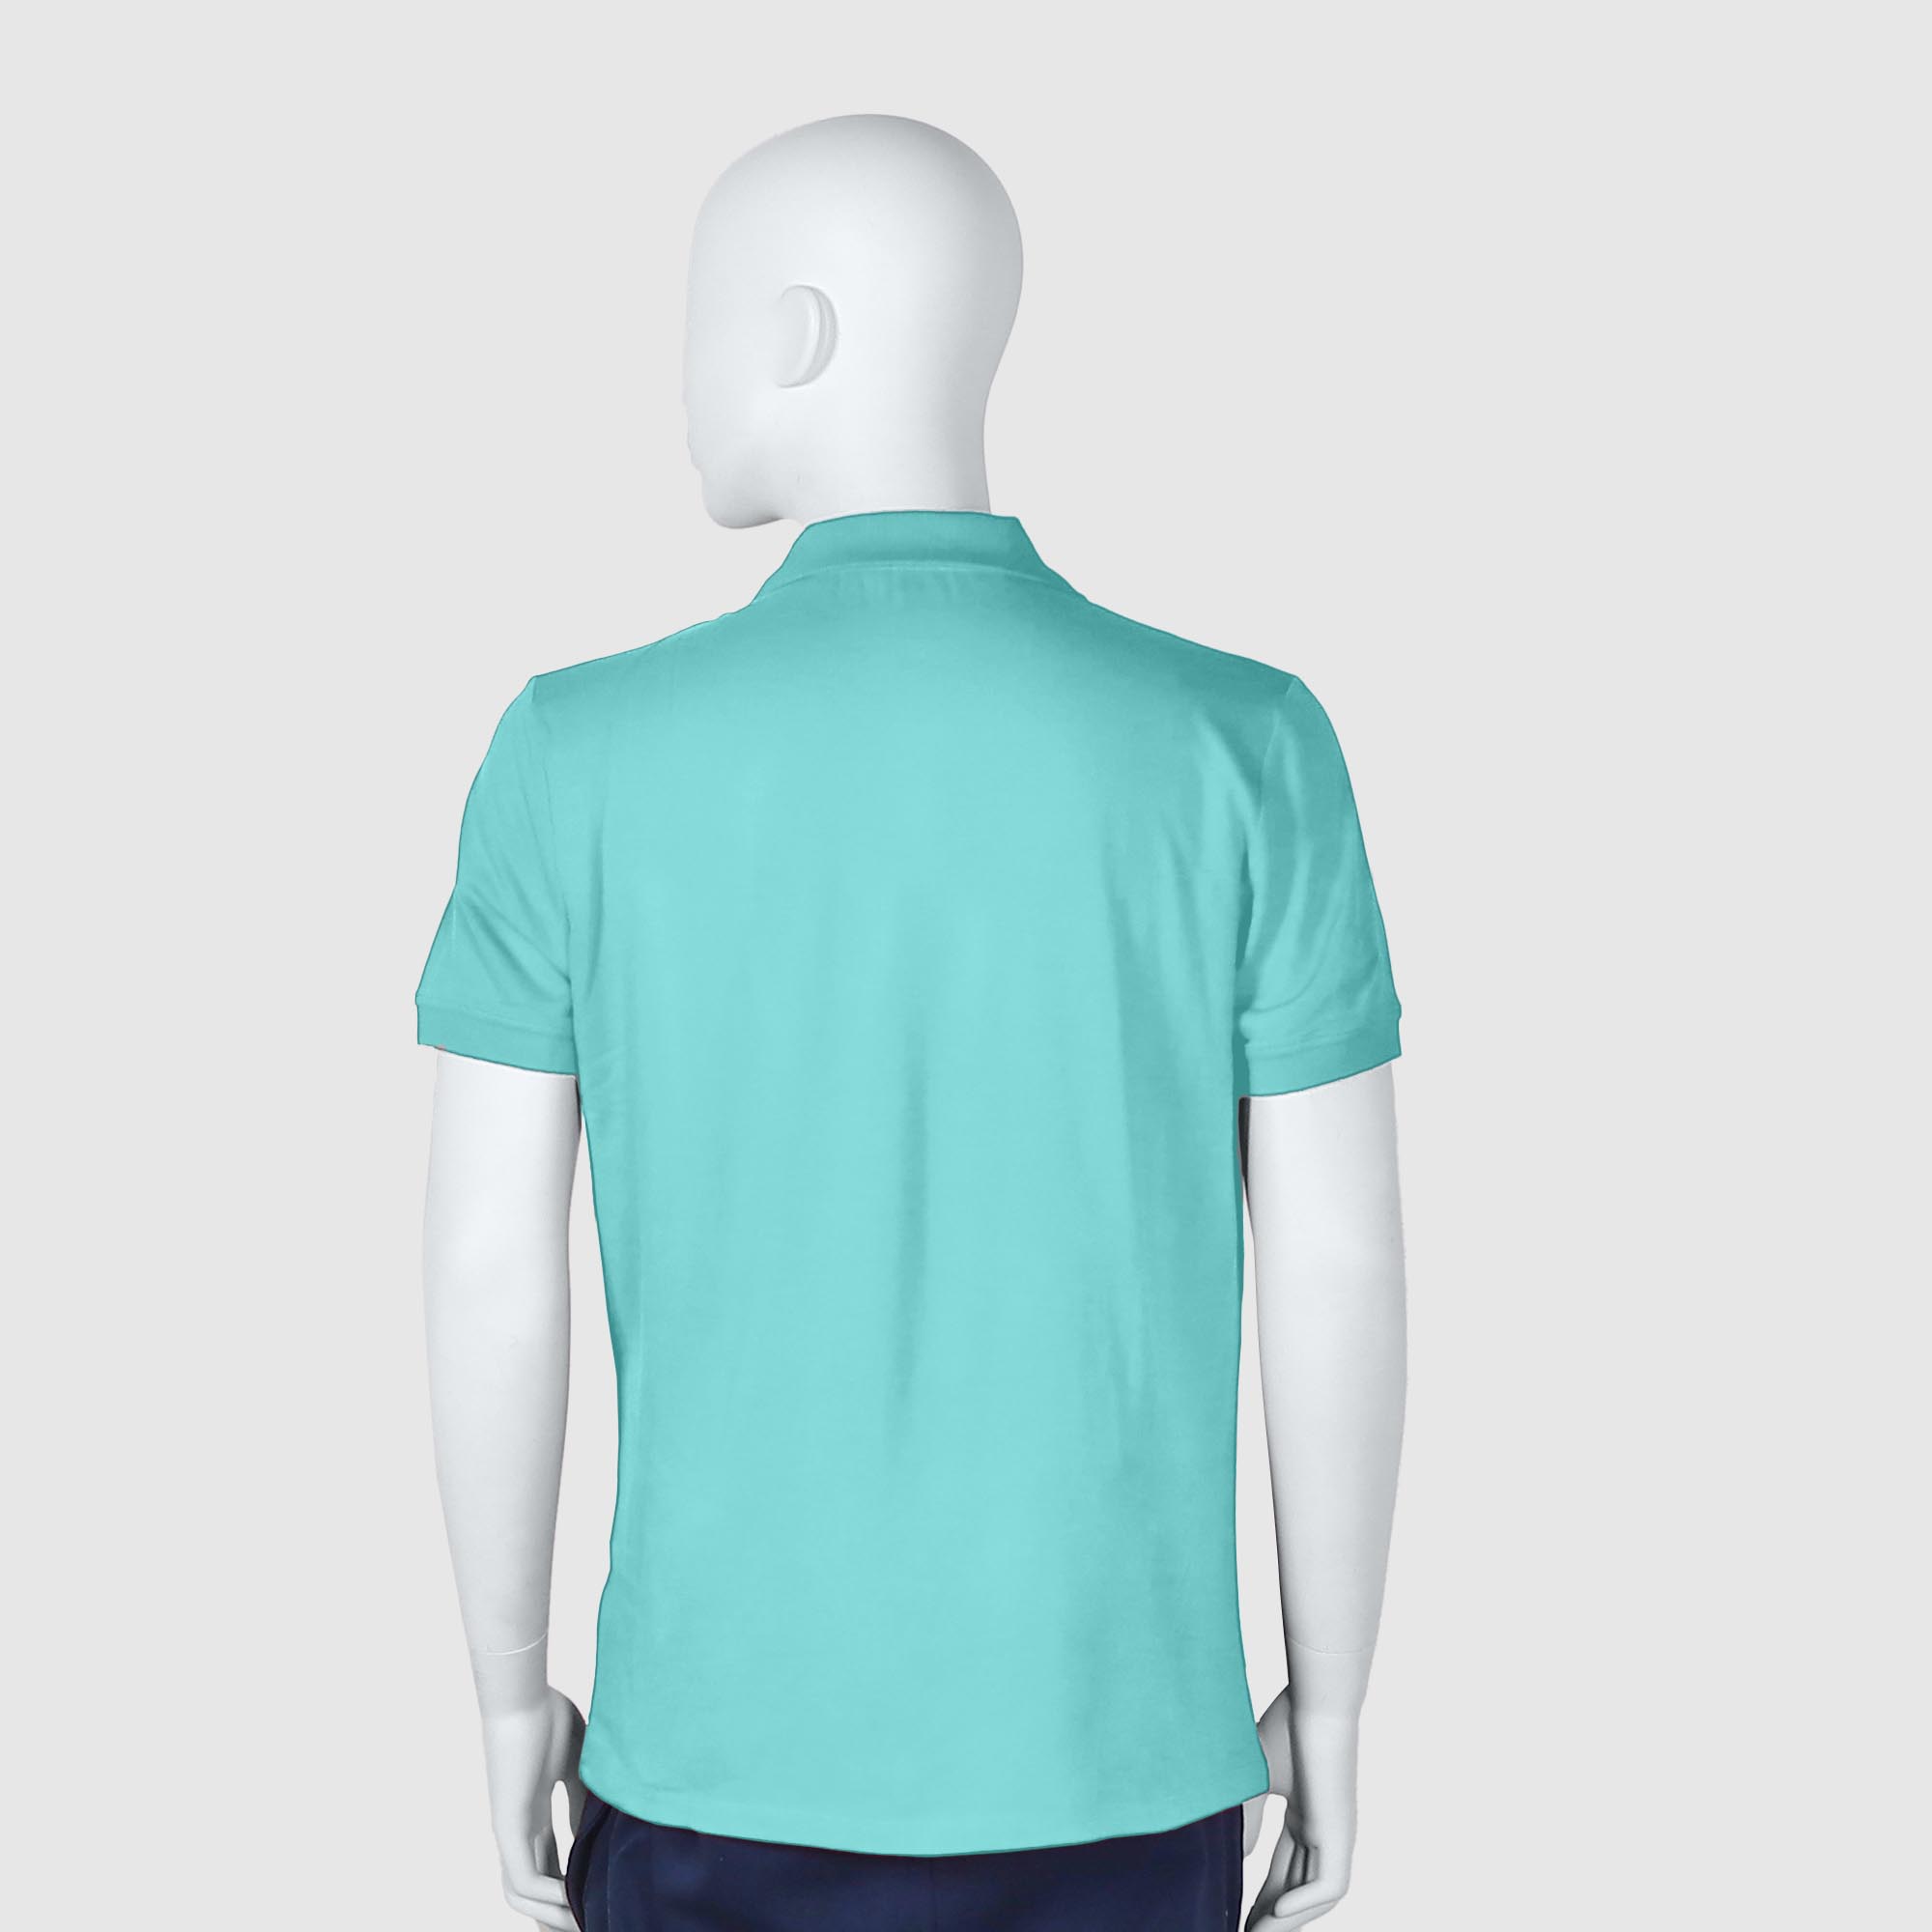 Мужская футболка-поло Diva Teks лазурная (DTD-12), цвет лазурный, размер 44-46 - фото 2